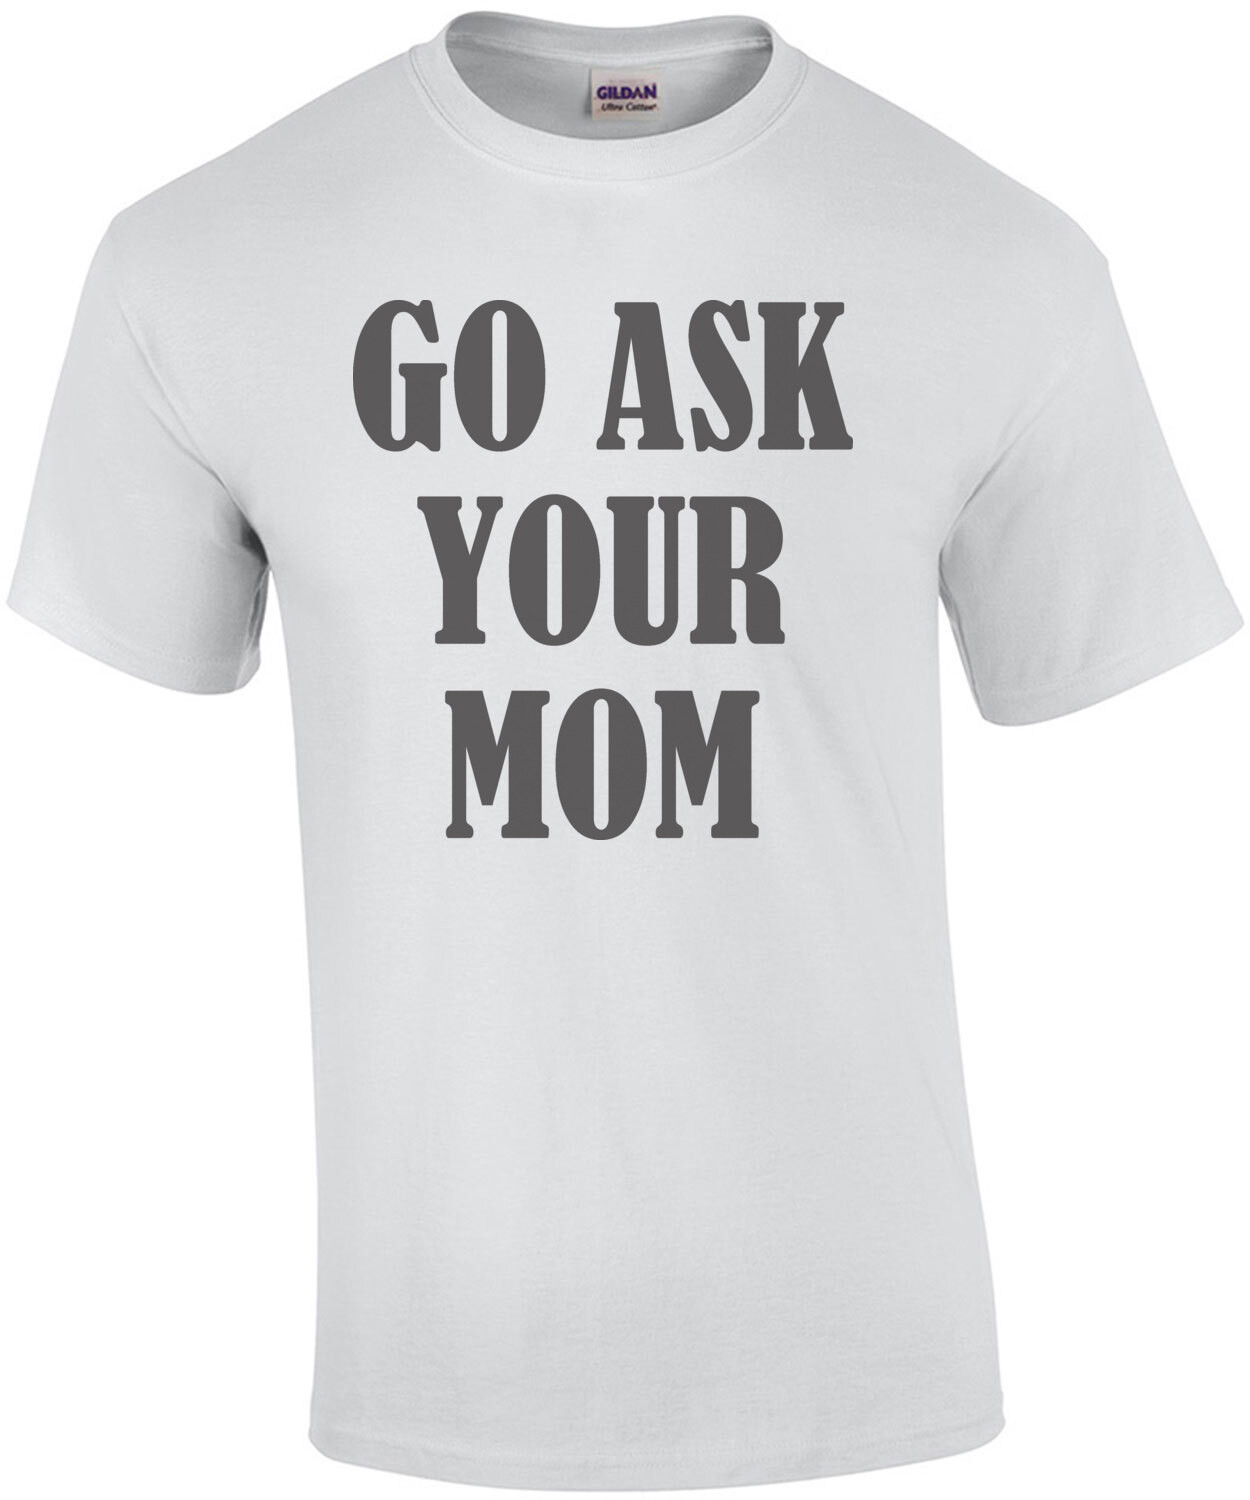 Go ask your Mom - funny parent t-shirt